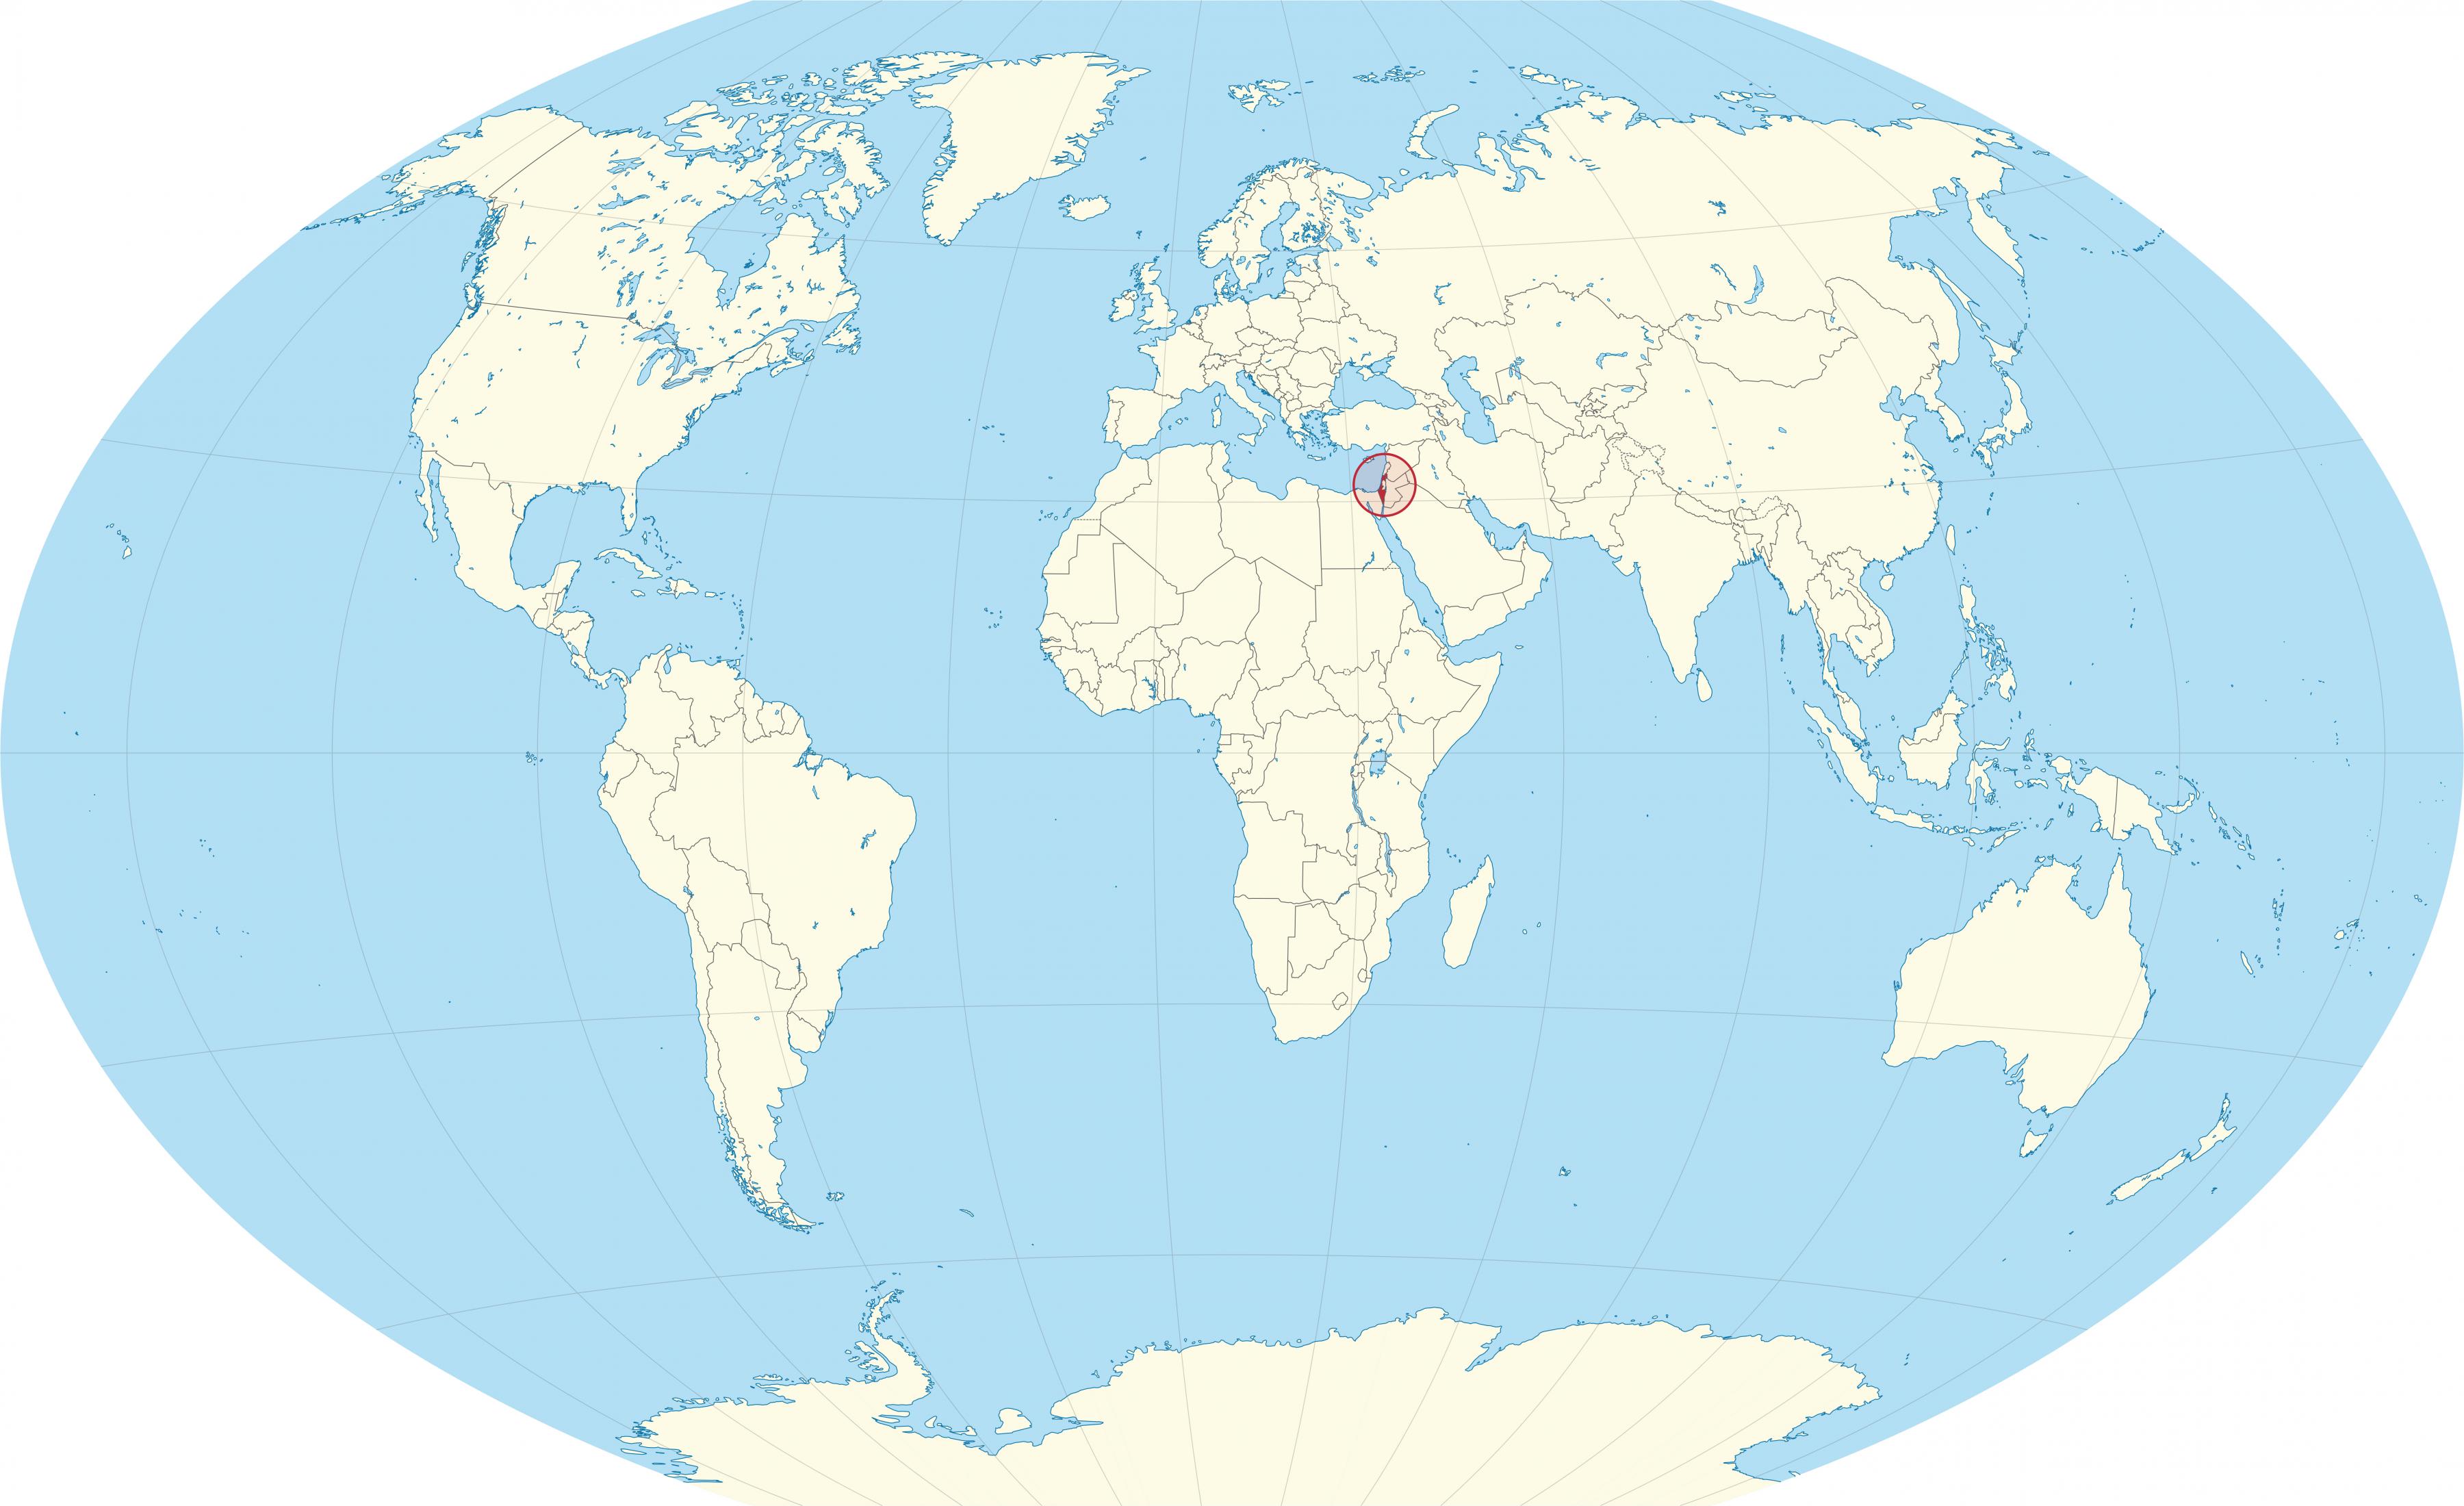 Israel On World Map 